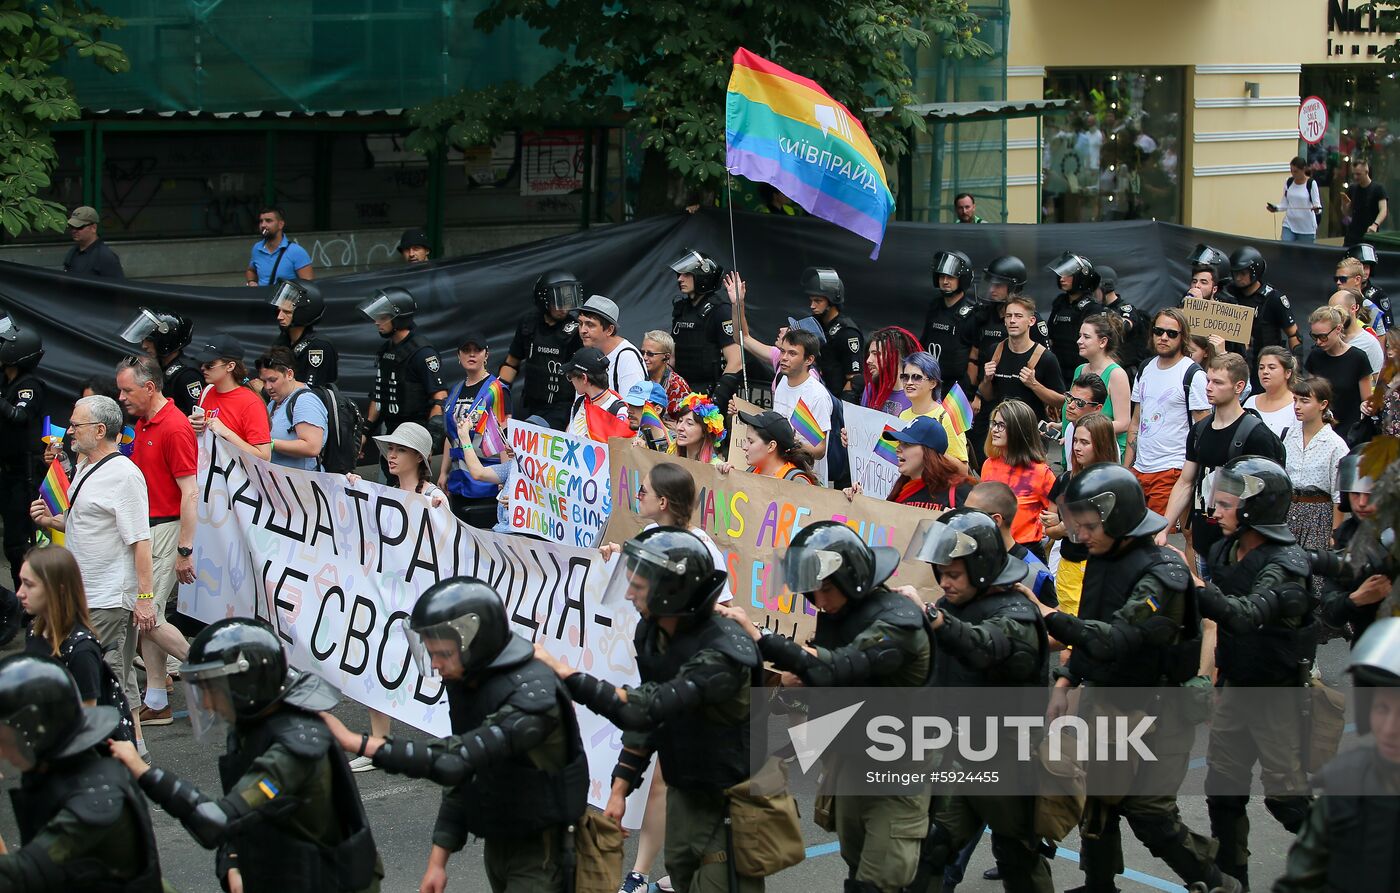 Ukraine Equality March